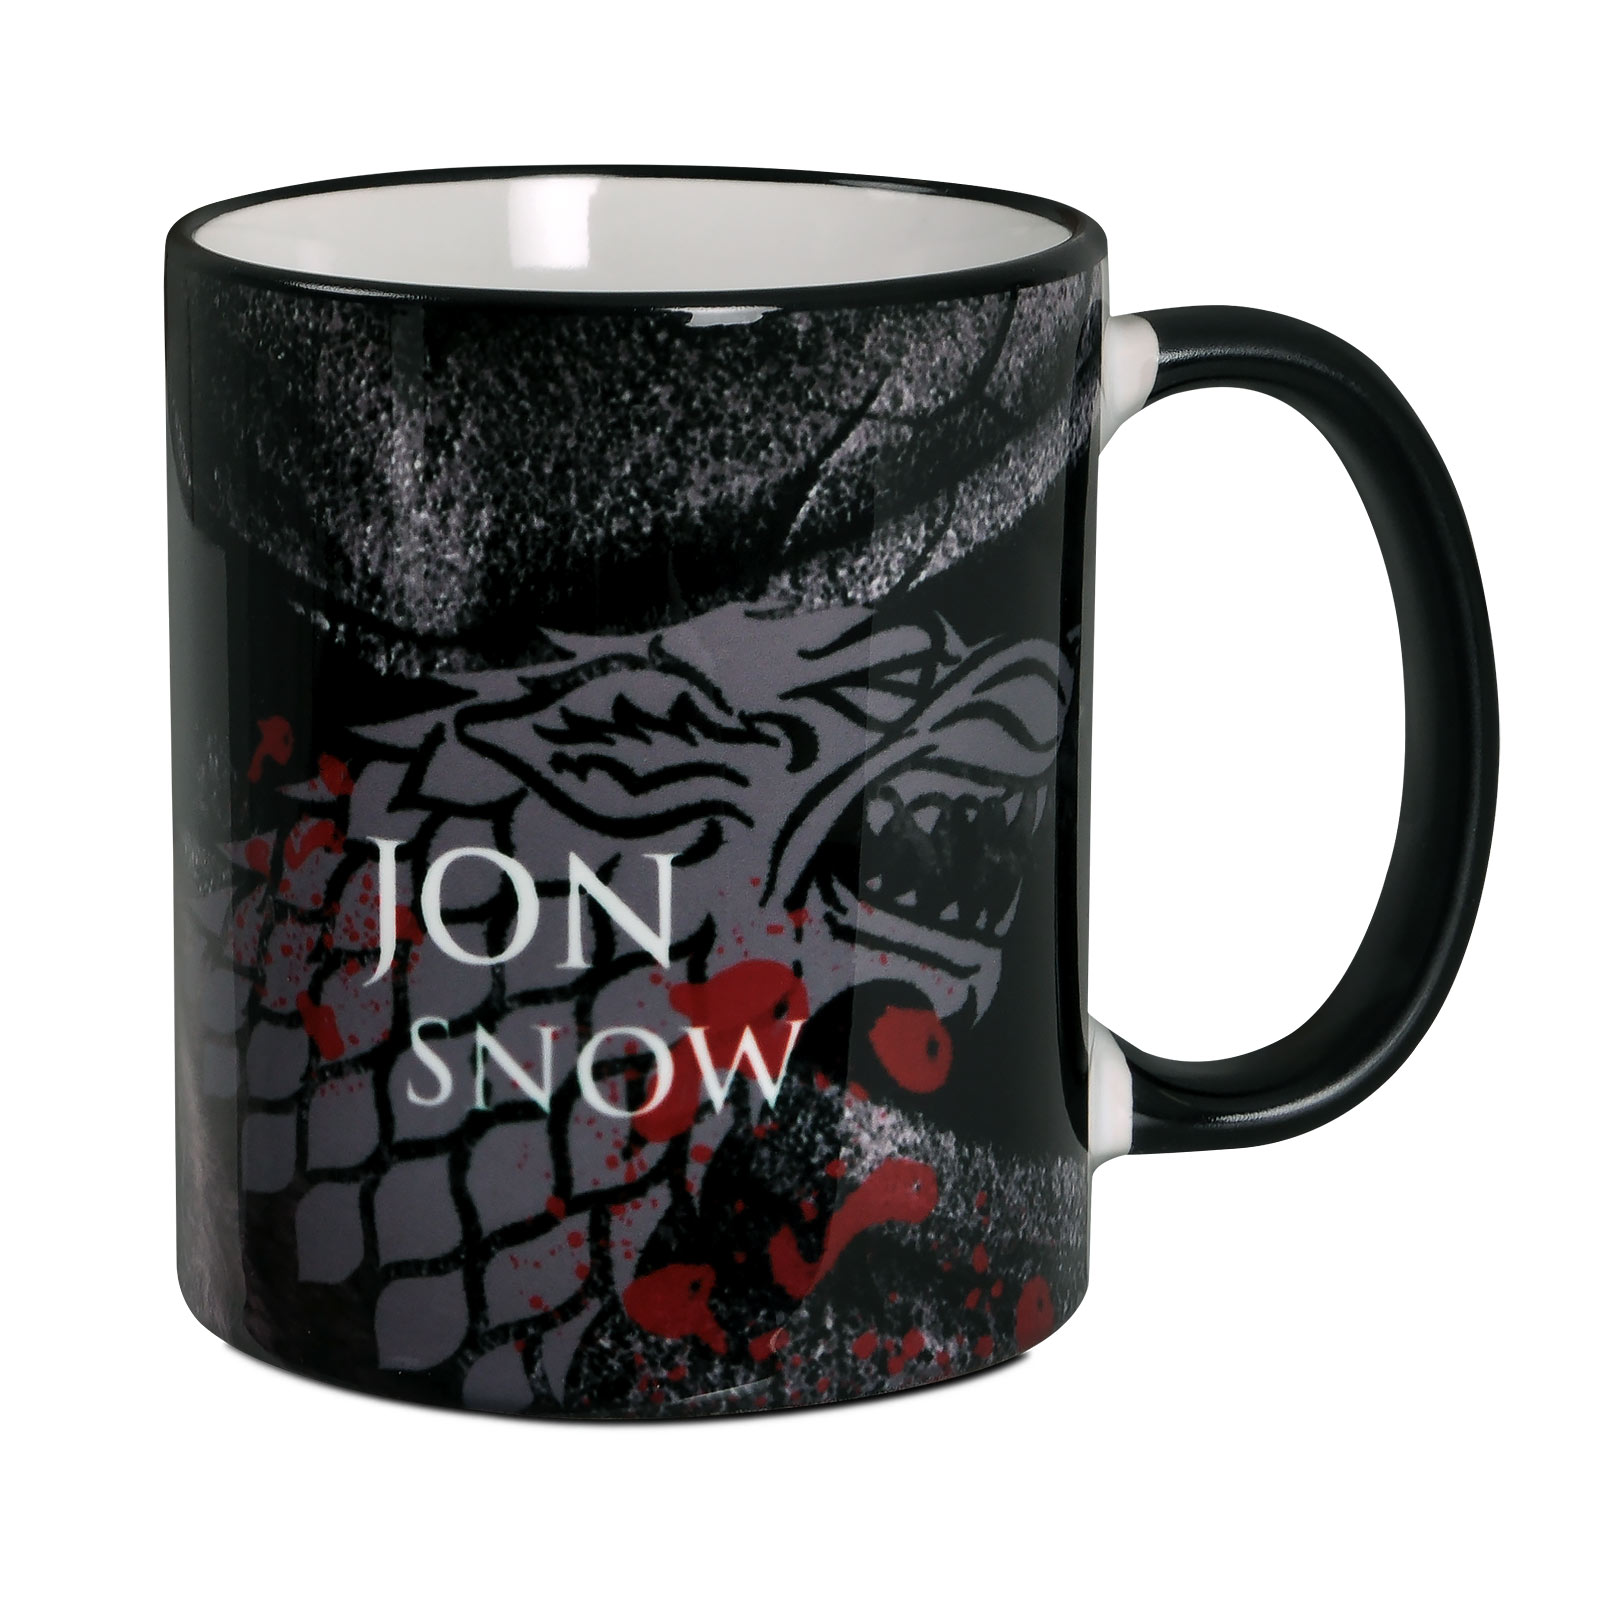 Jon Snow For The Throne Tasse - Game of Thrones